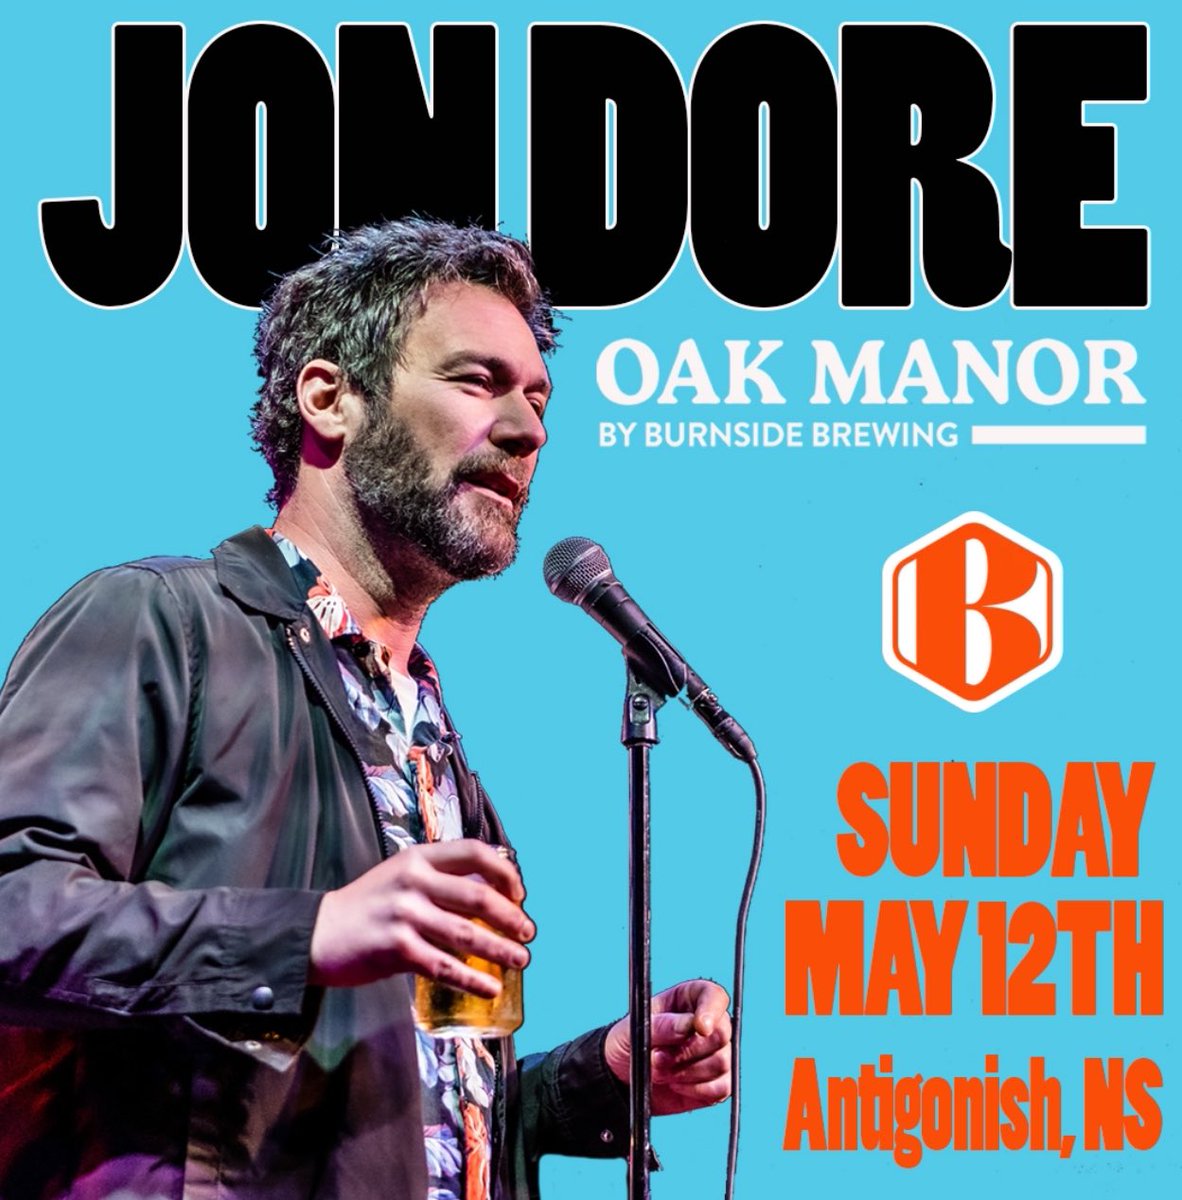 Mighty Antigonish Nova Scotia! Join me May 12th! It’s gonna go good! Tickets at jondore.com